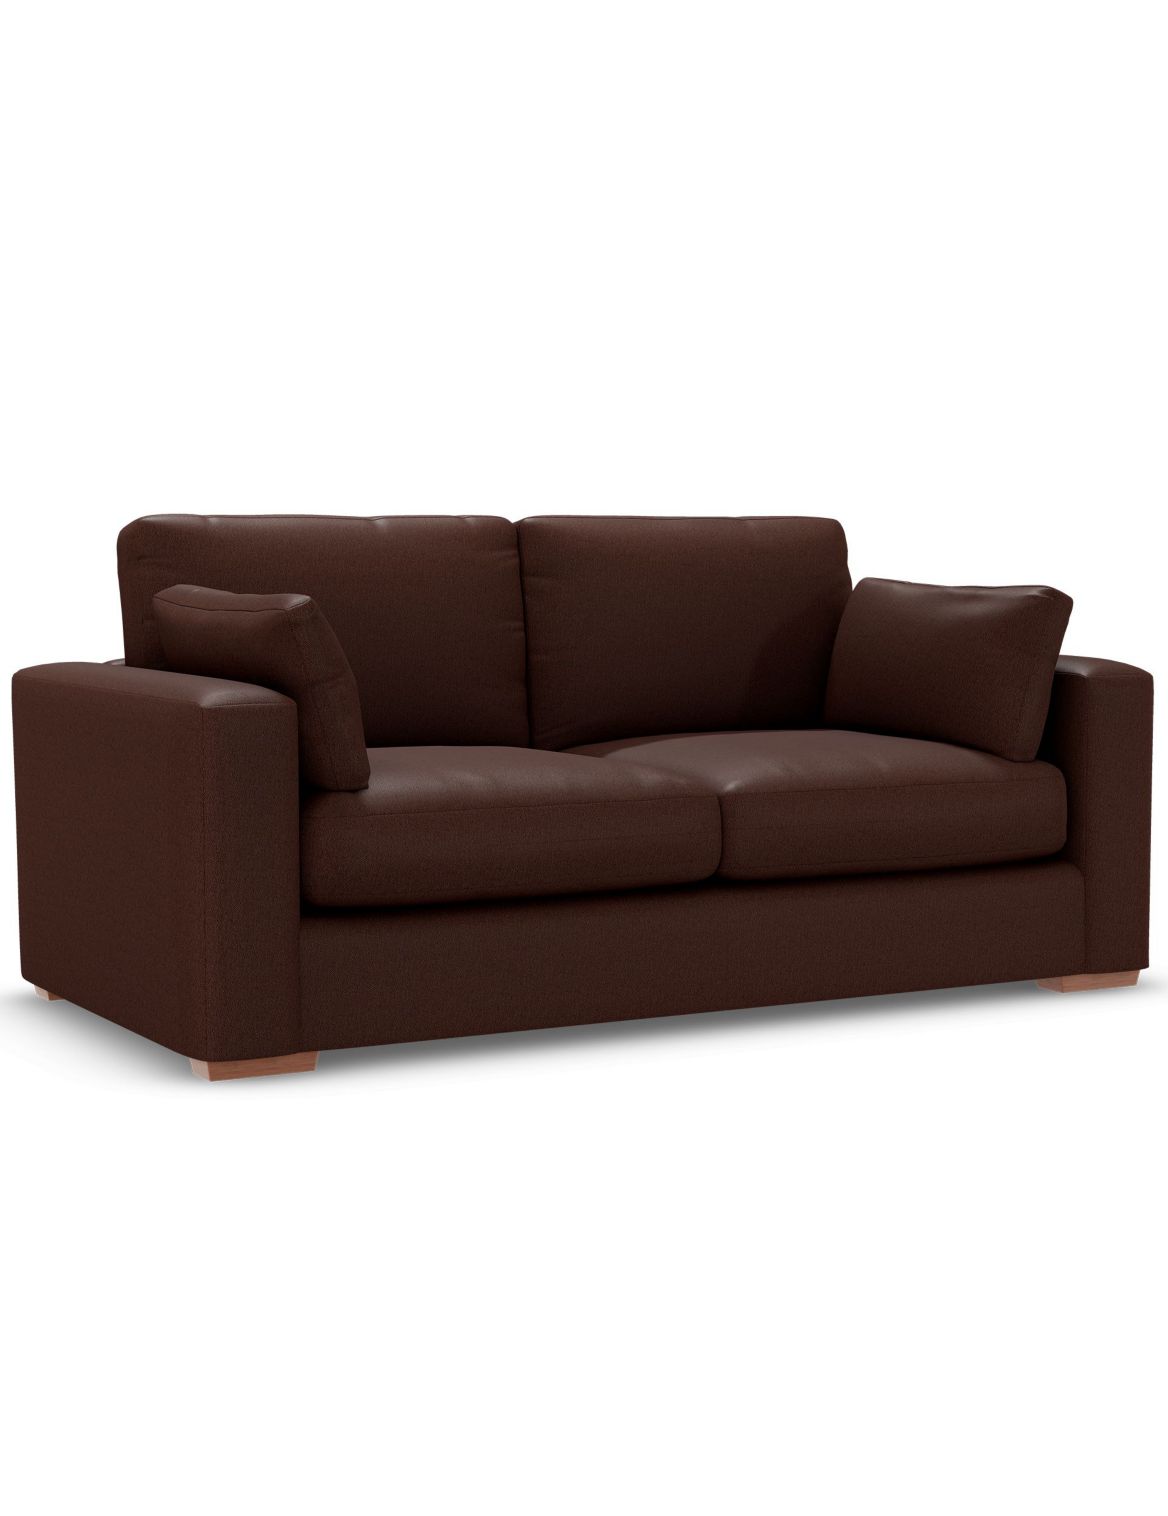 Boston Large Sofa brown